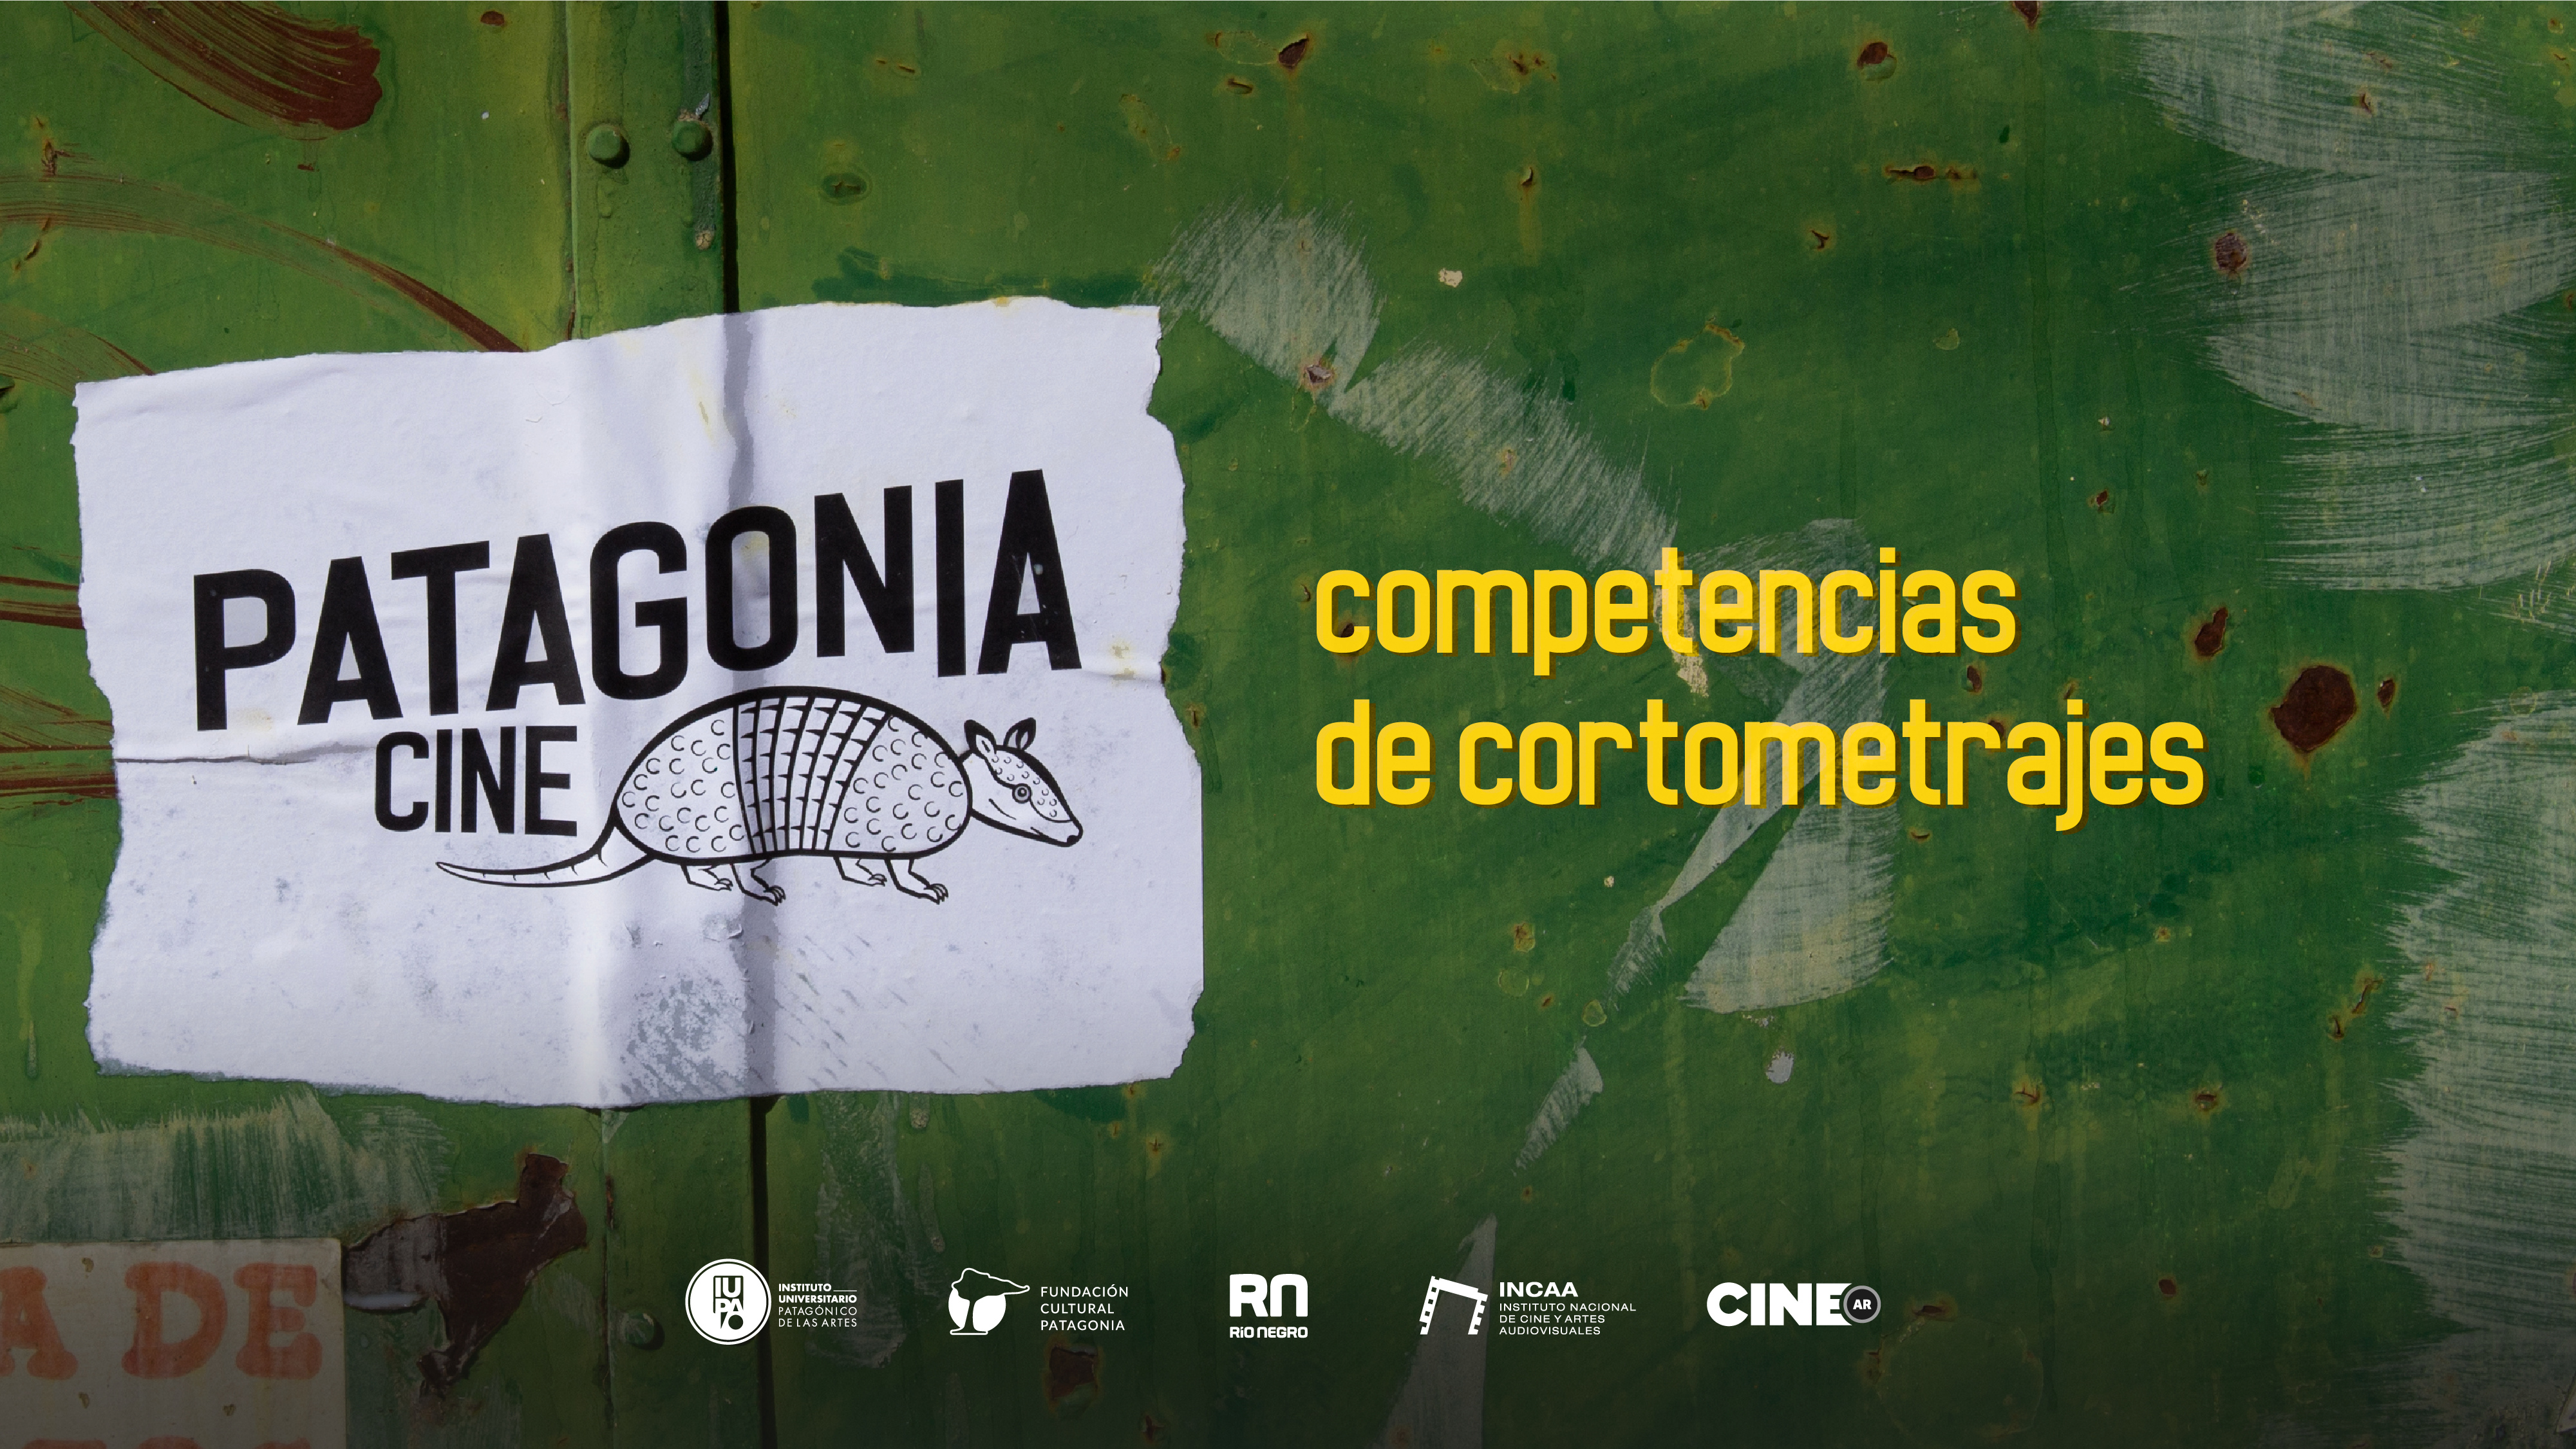 Patagonia Cine